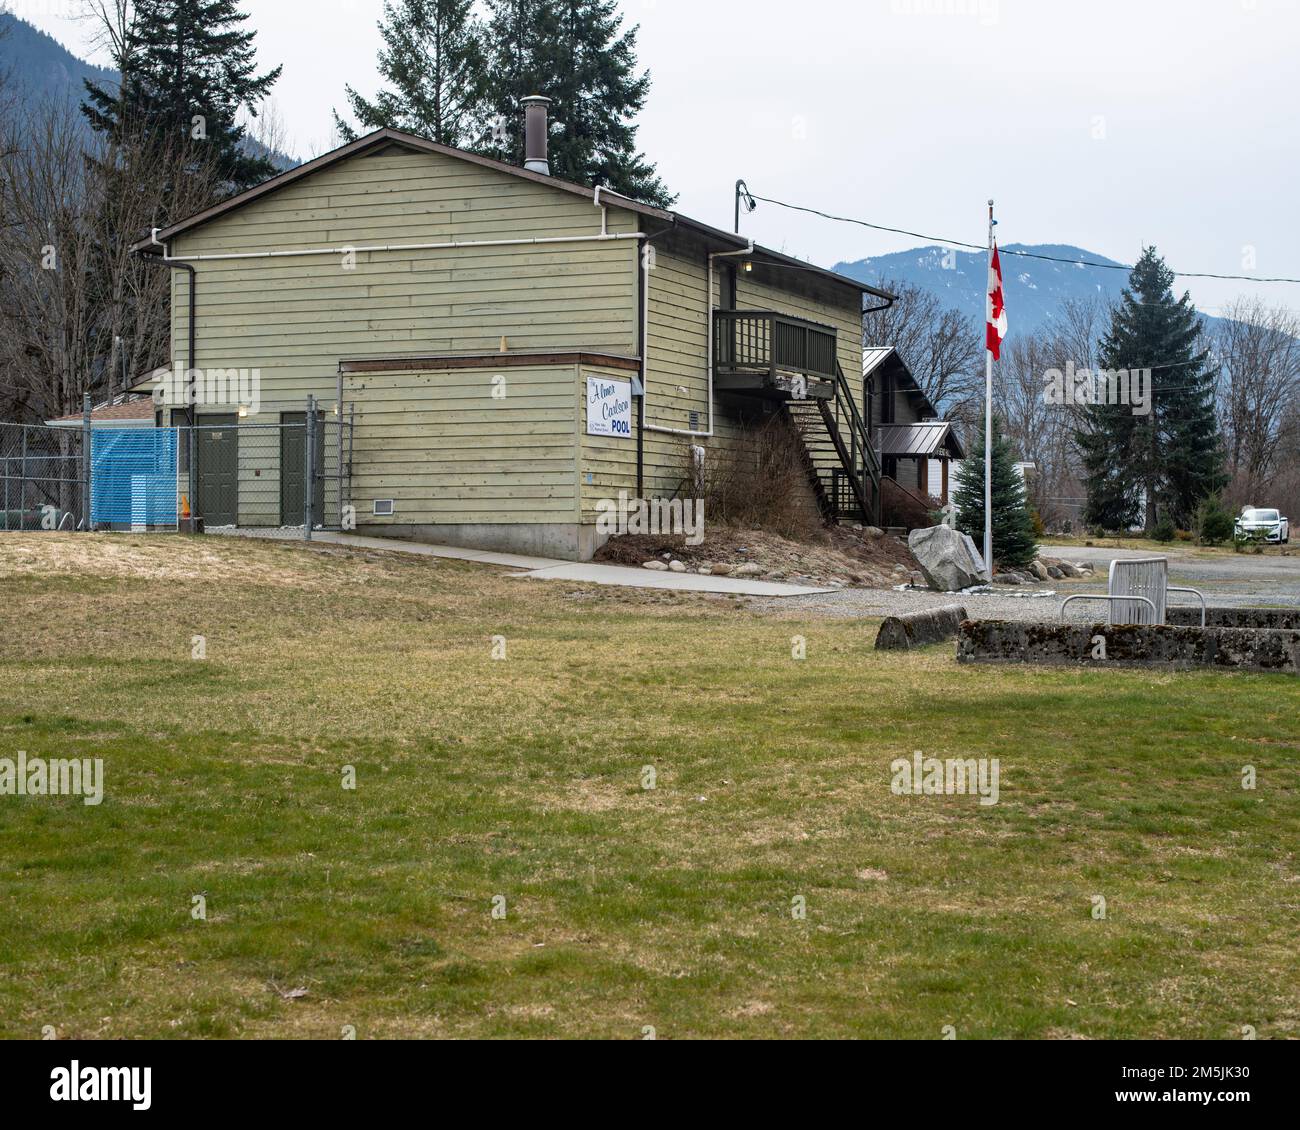 Almer Carlson Pool in North Bend, British Columbia, Canada Stock Photo